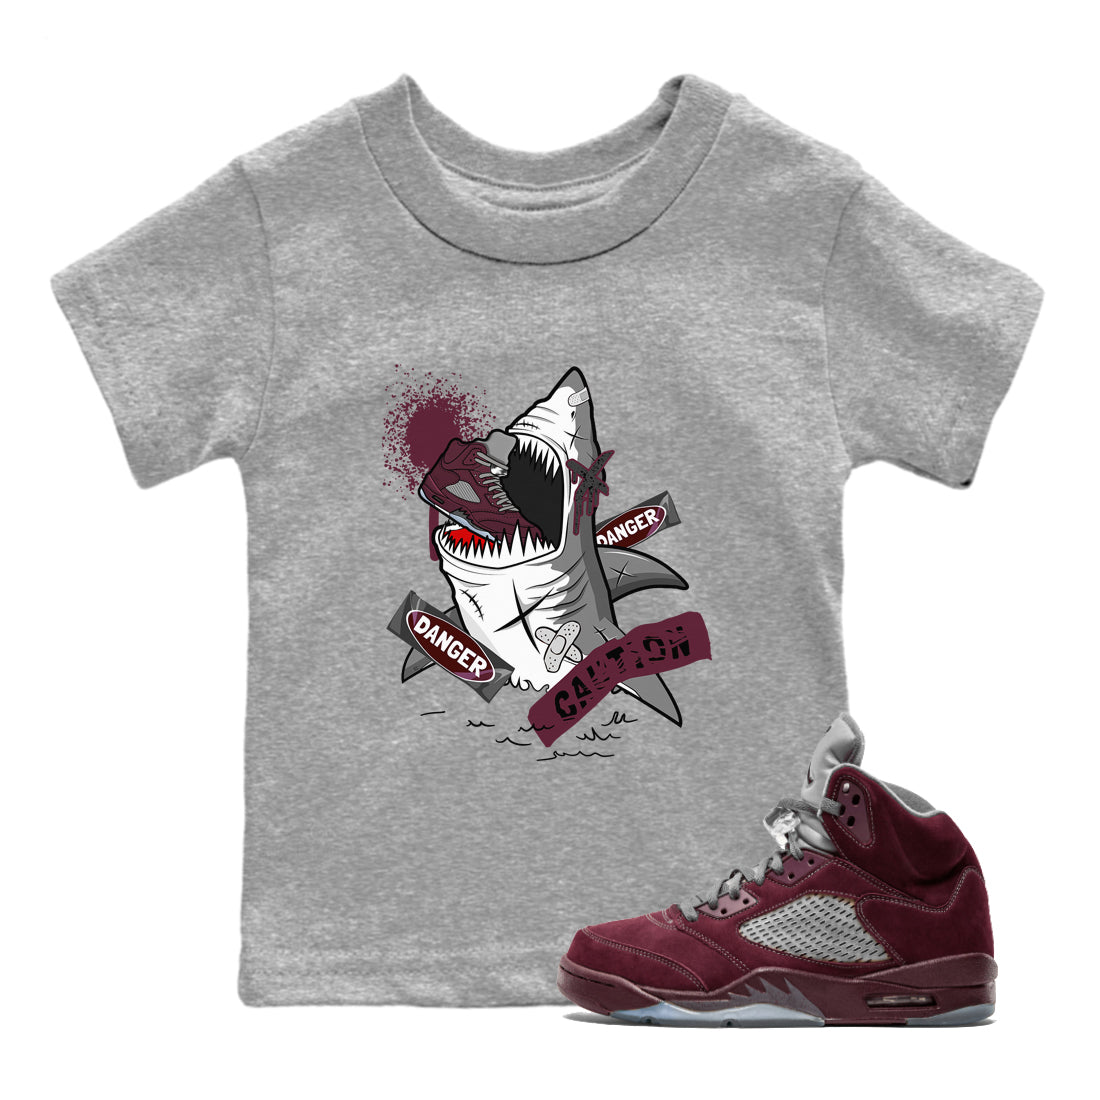 5s Burgundy shirt to match jordans Dangerous Shark Streetwear Sneaker Shirt Air Jordan 5 Burgundy Drip Gear Zone Sneaker Matching Clothing Baby Toddler Heather Grey 1 T-Shirt